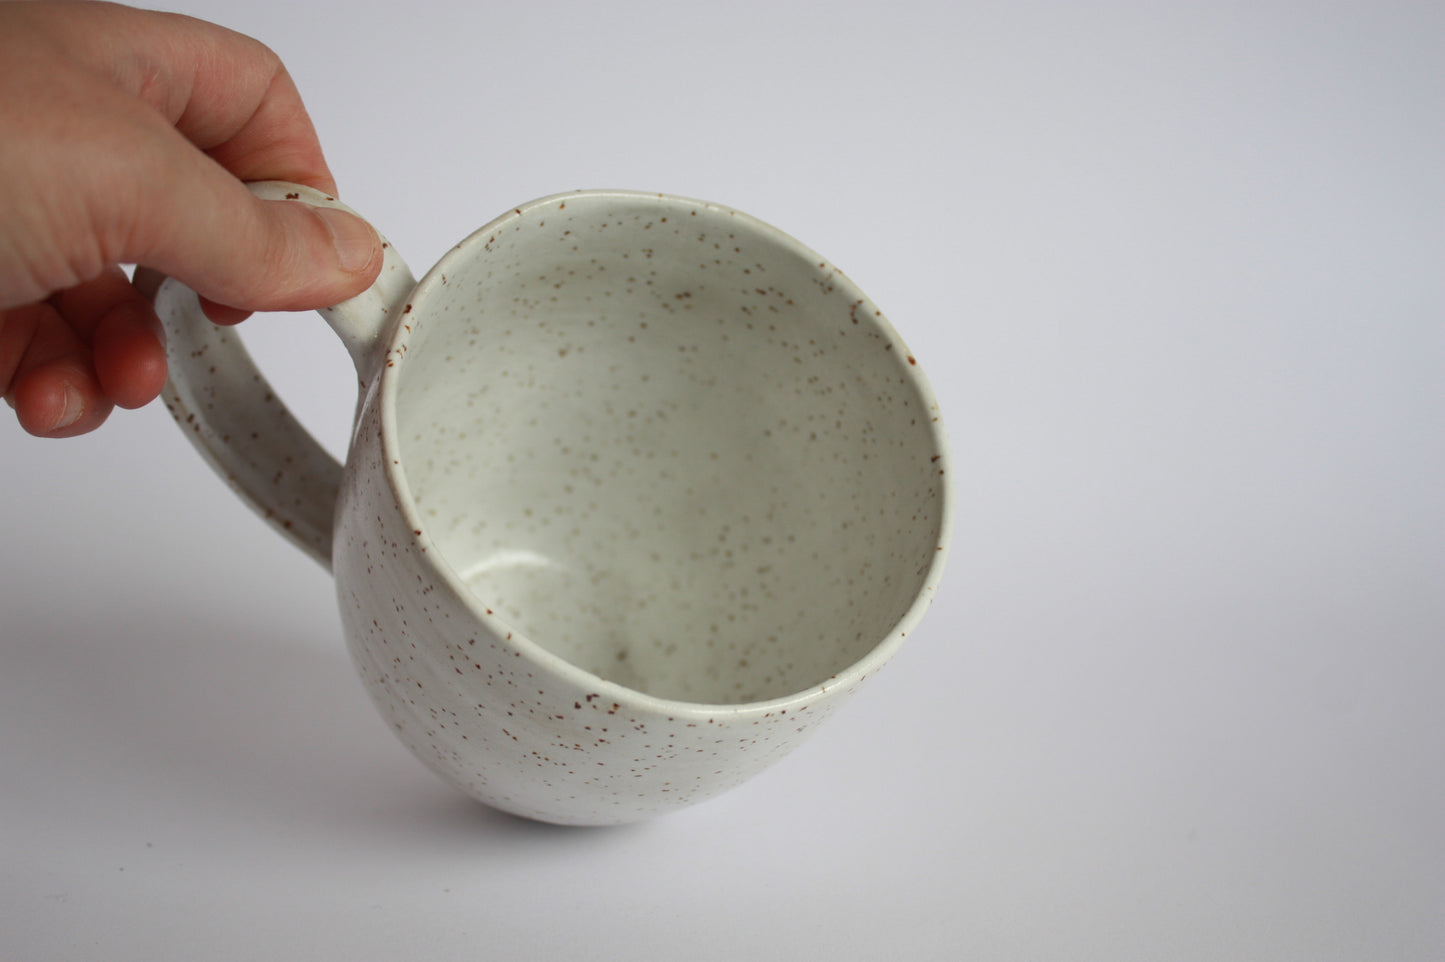 Mug with handle, Côte de craie